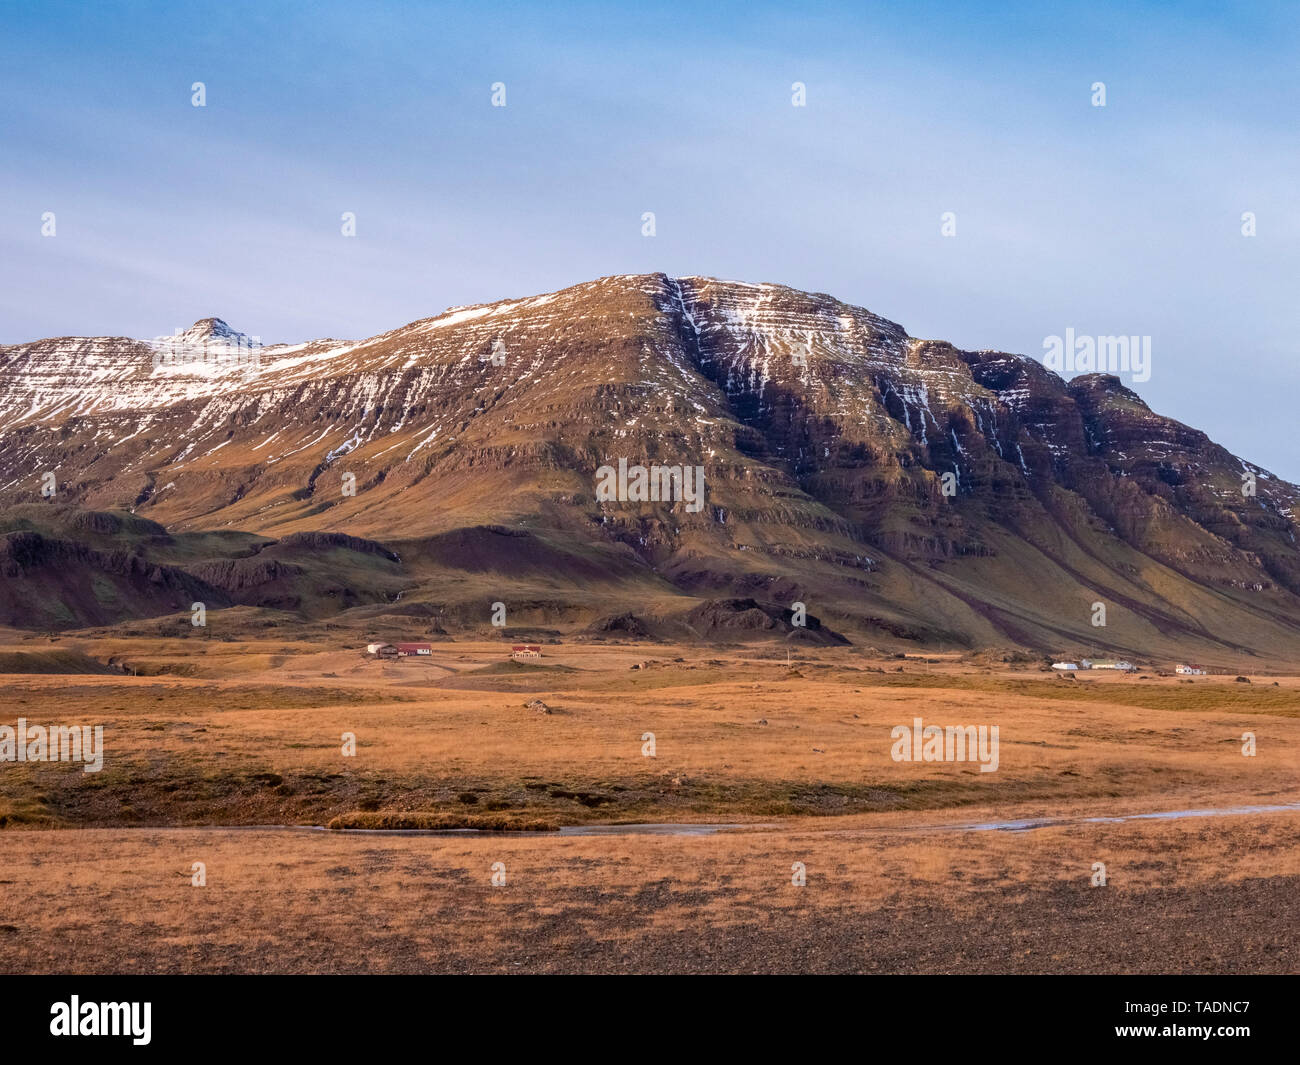 Iceland, Austurland, landscape with mountain on the way to Egilsstadir Stock Photo